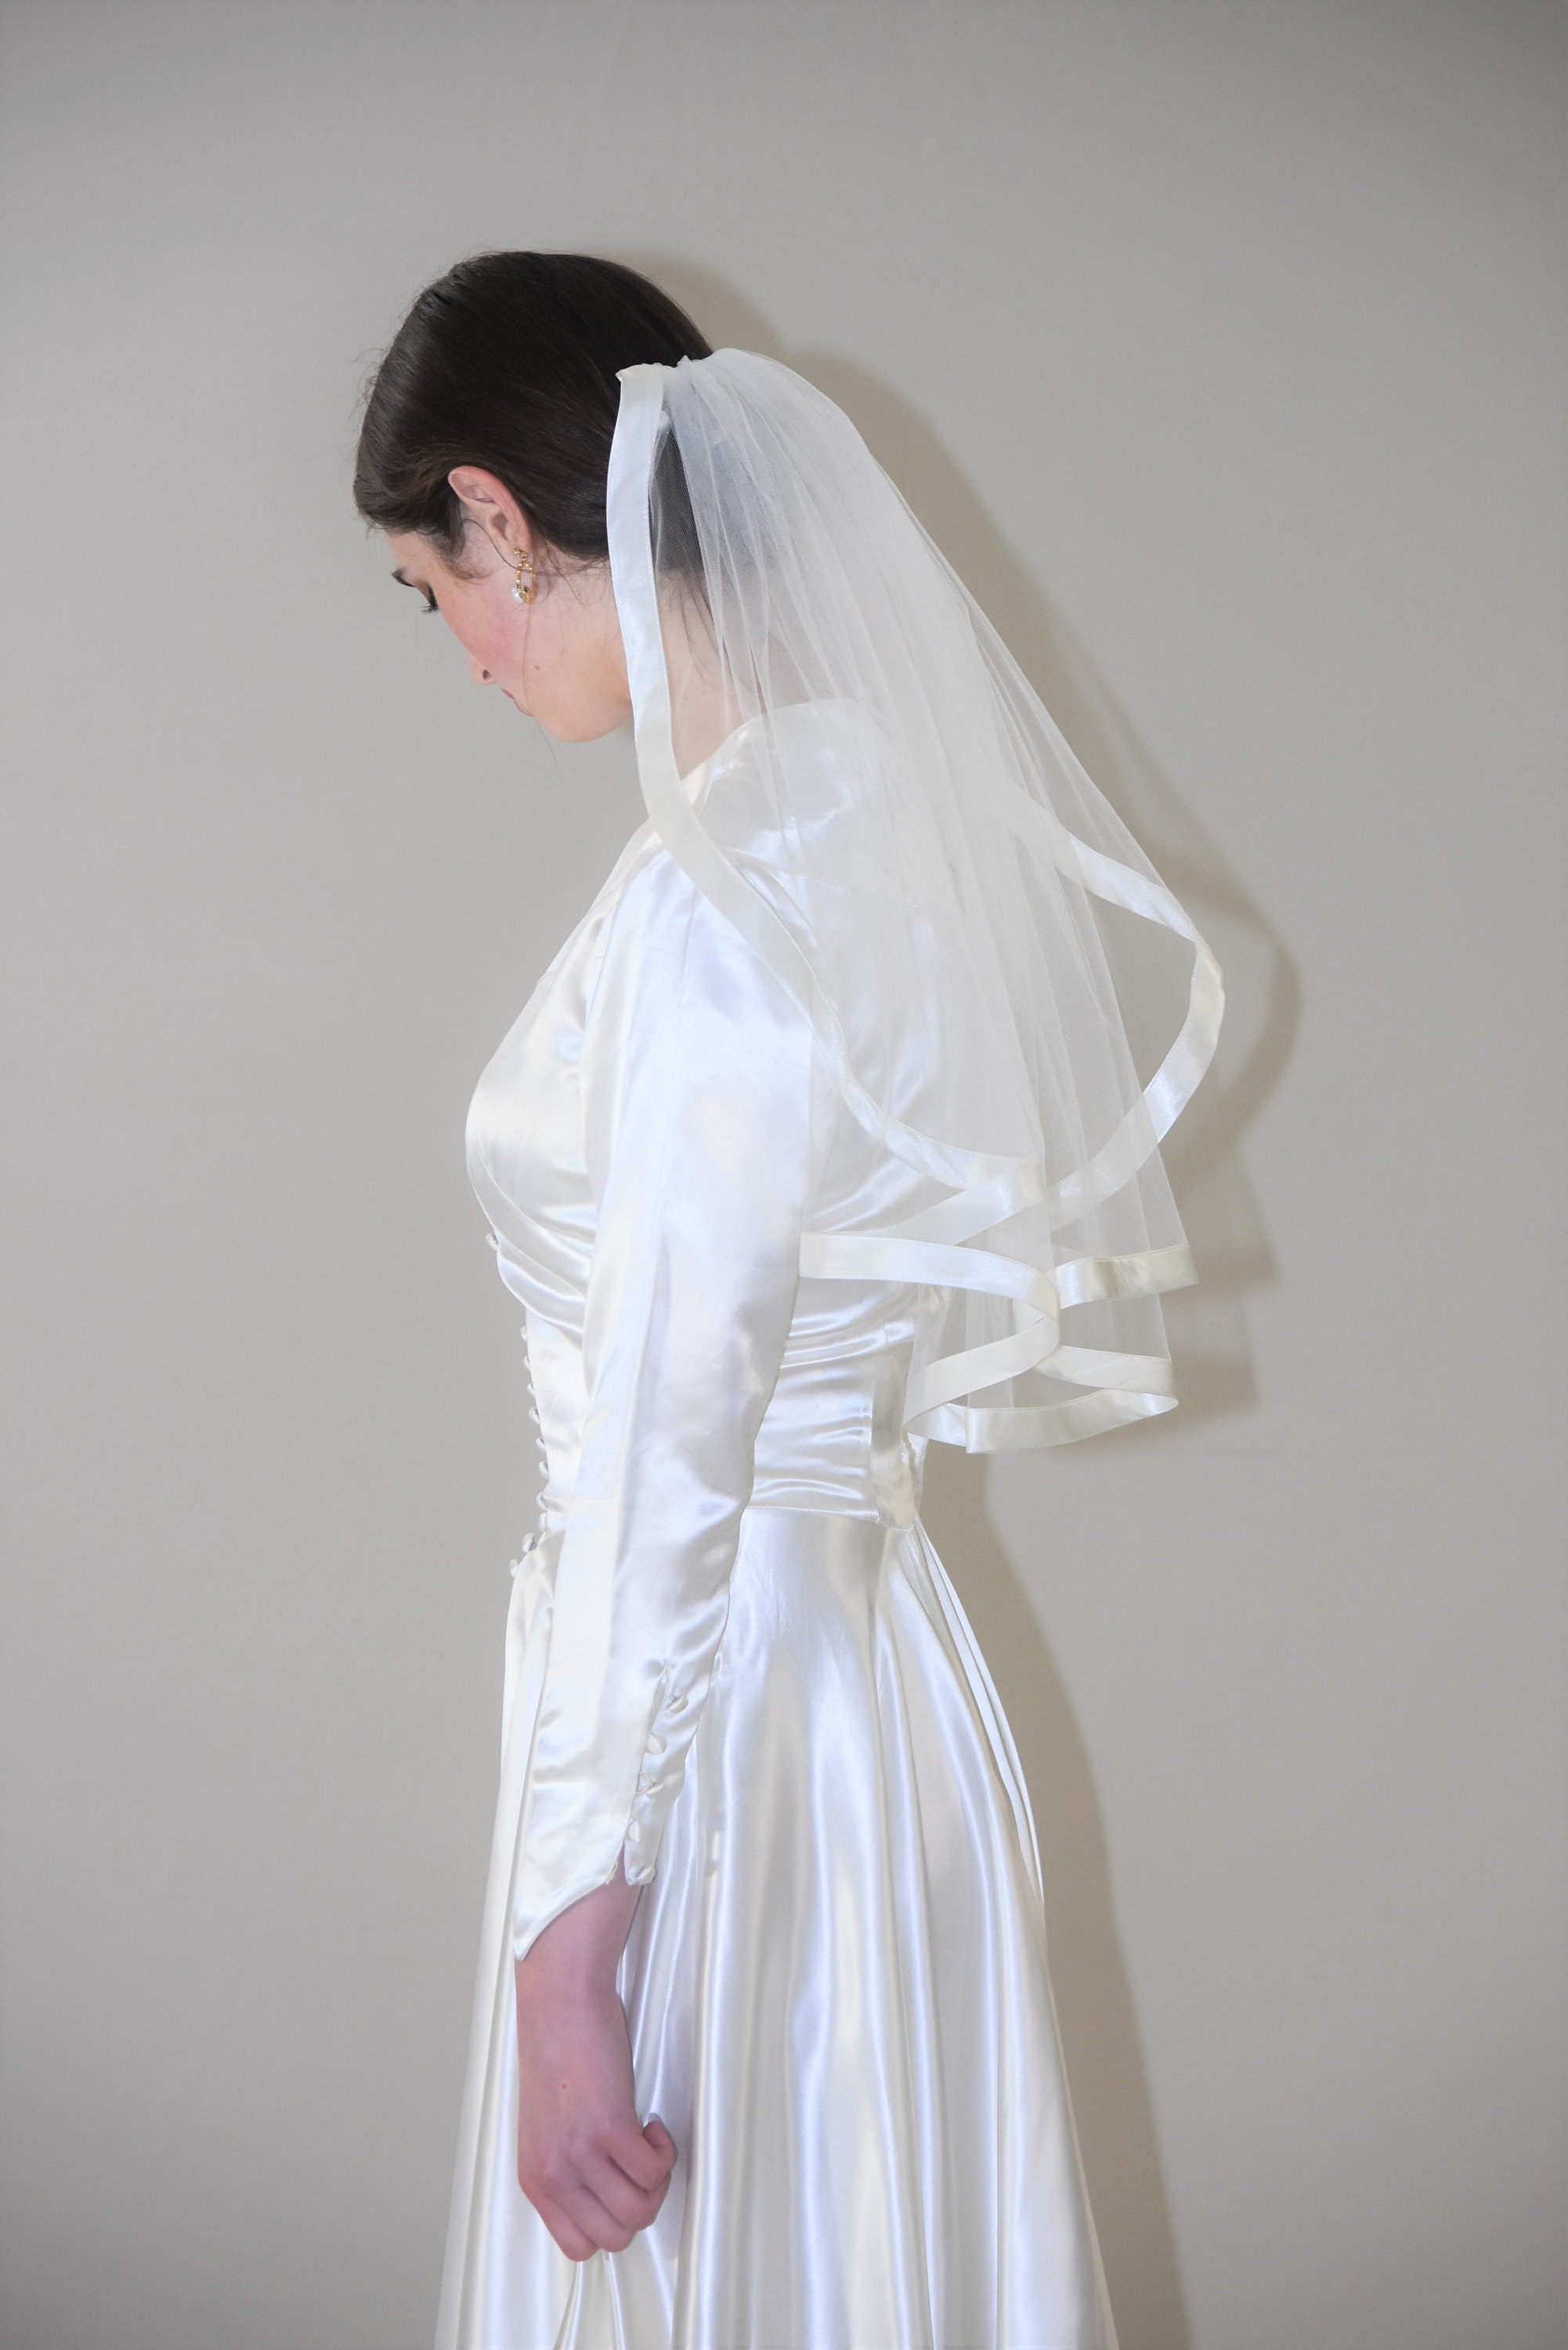 Vintage-inspired Short Wedding Veil with 1/4 Satin Edge